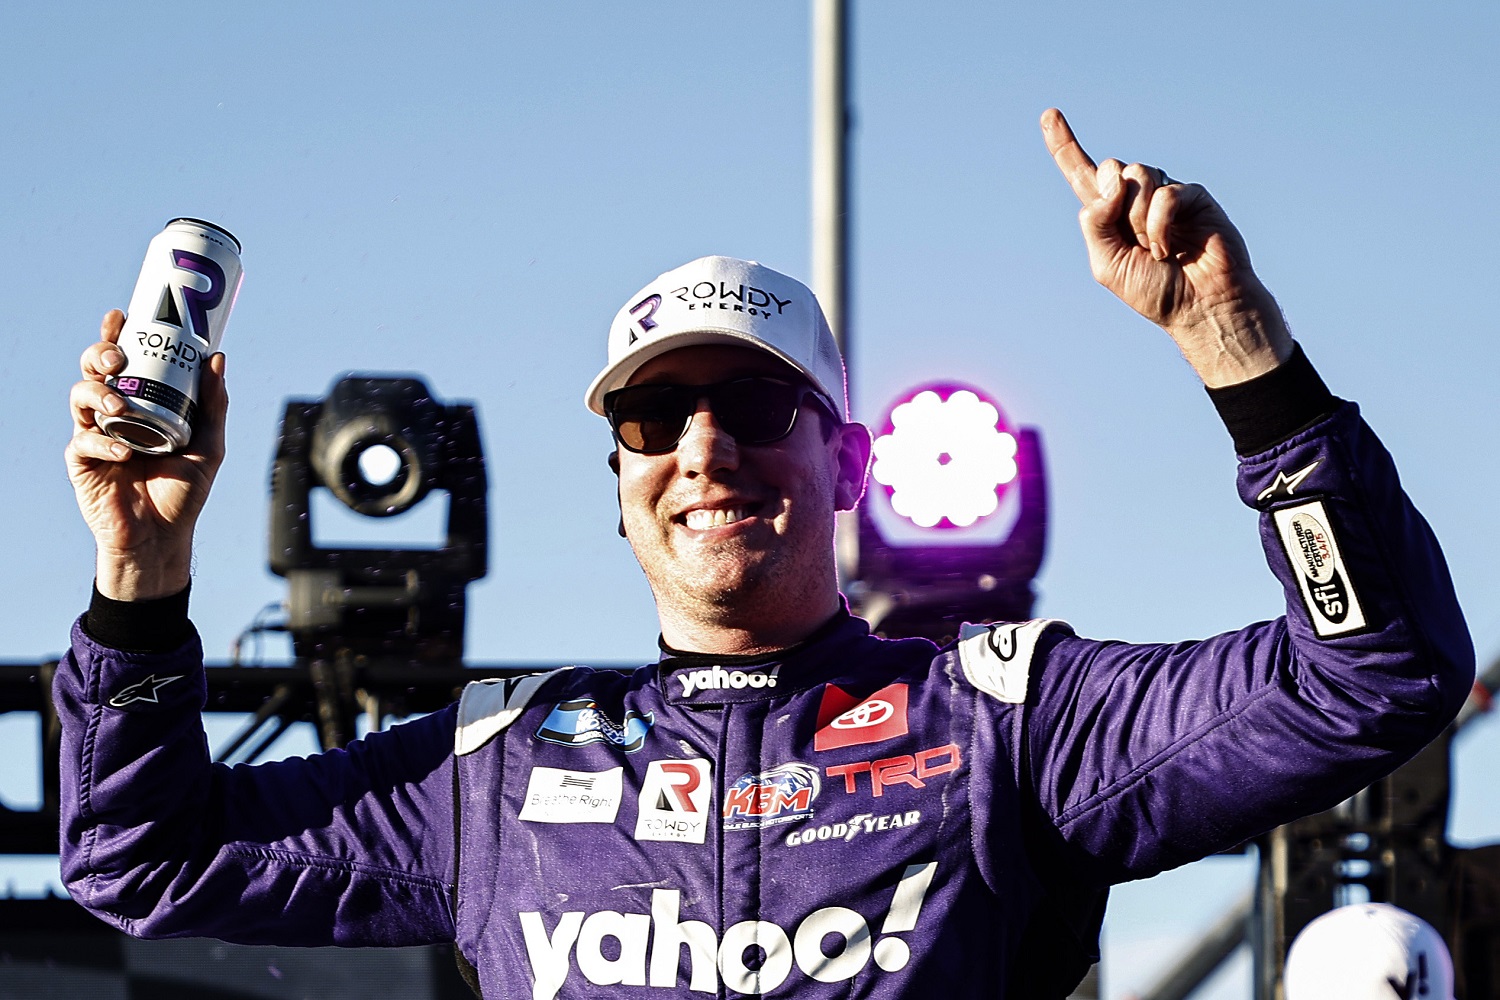 Kyle Busch celebrates after winning the NASCAR Camping World Truck Series DoorDash 250 at Sonoma Raceway on June 11, 2022. | Chris Graythen/Getty Images